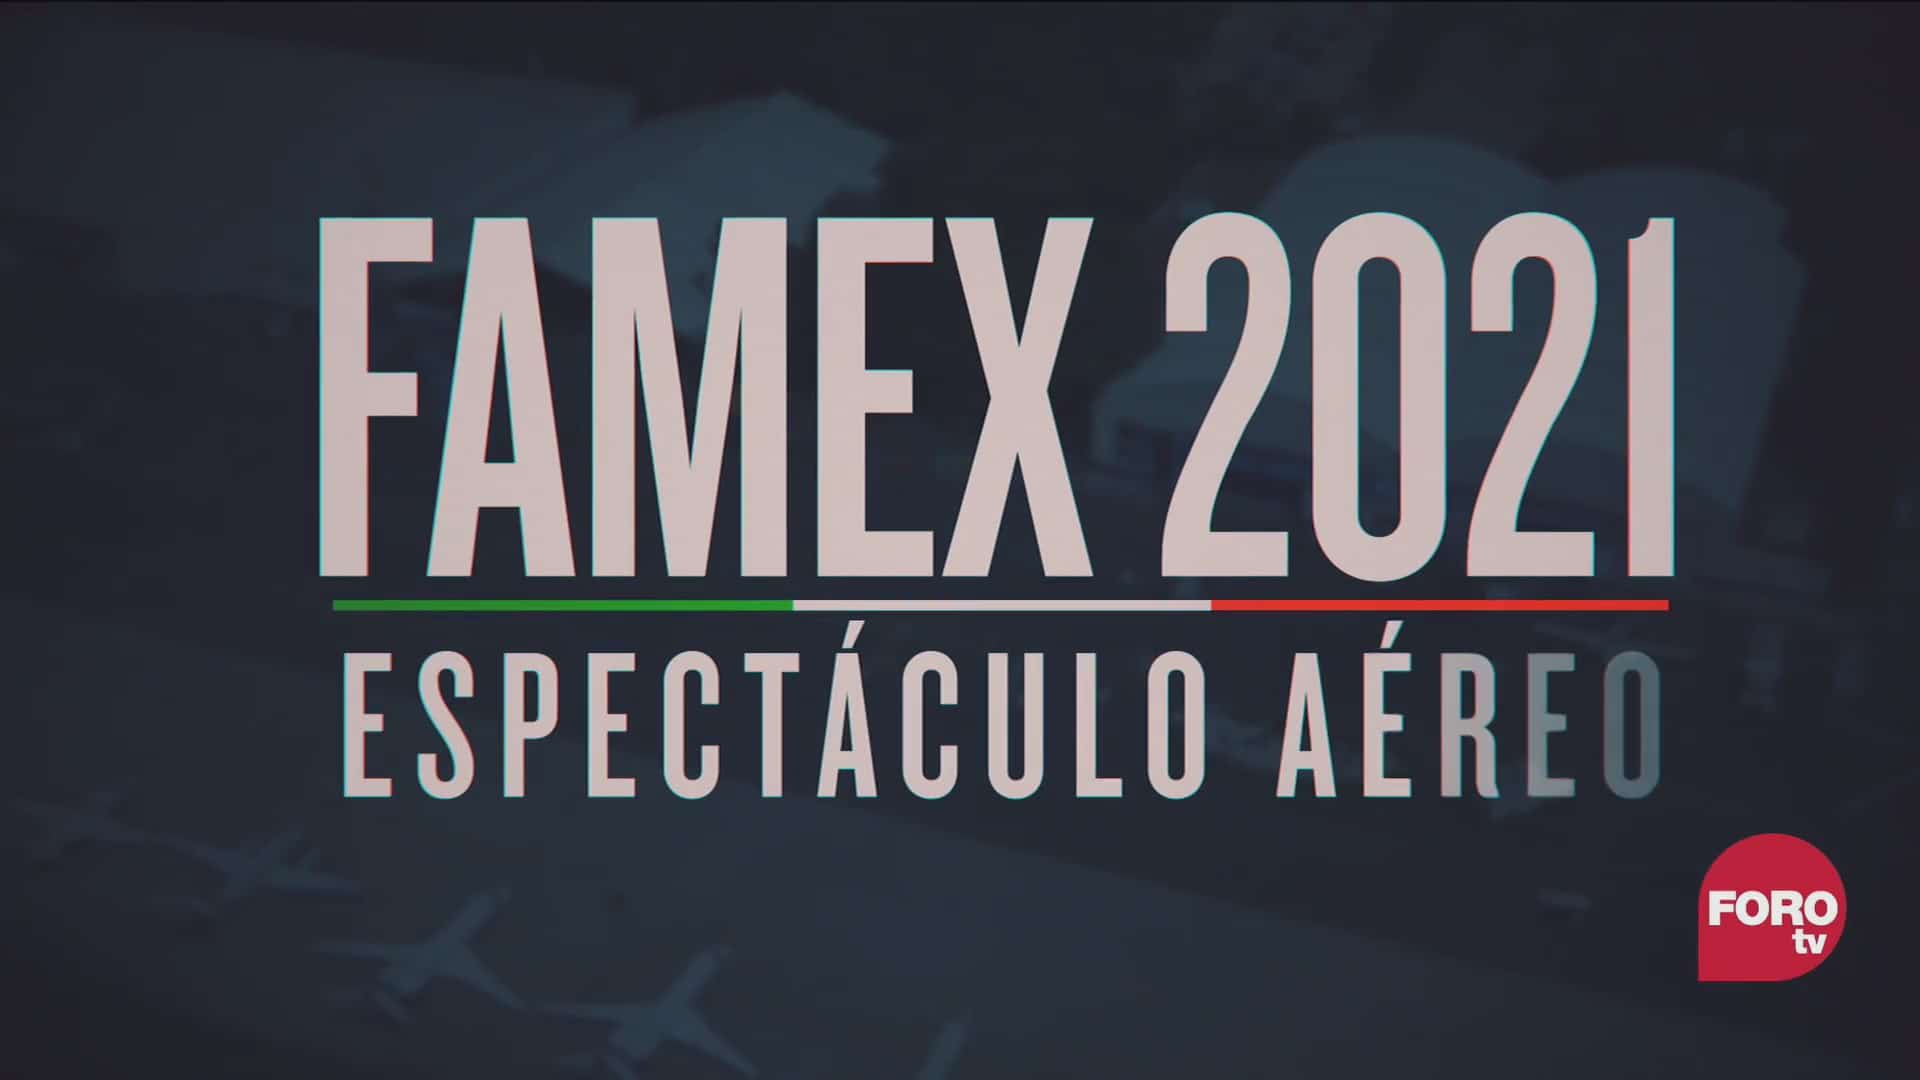 FAMEX 2021 Feria Aeroespacial México 2021